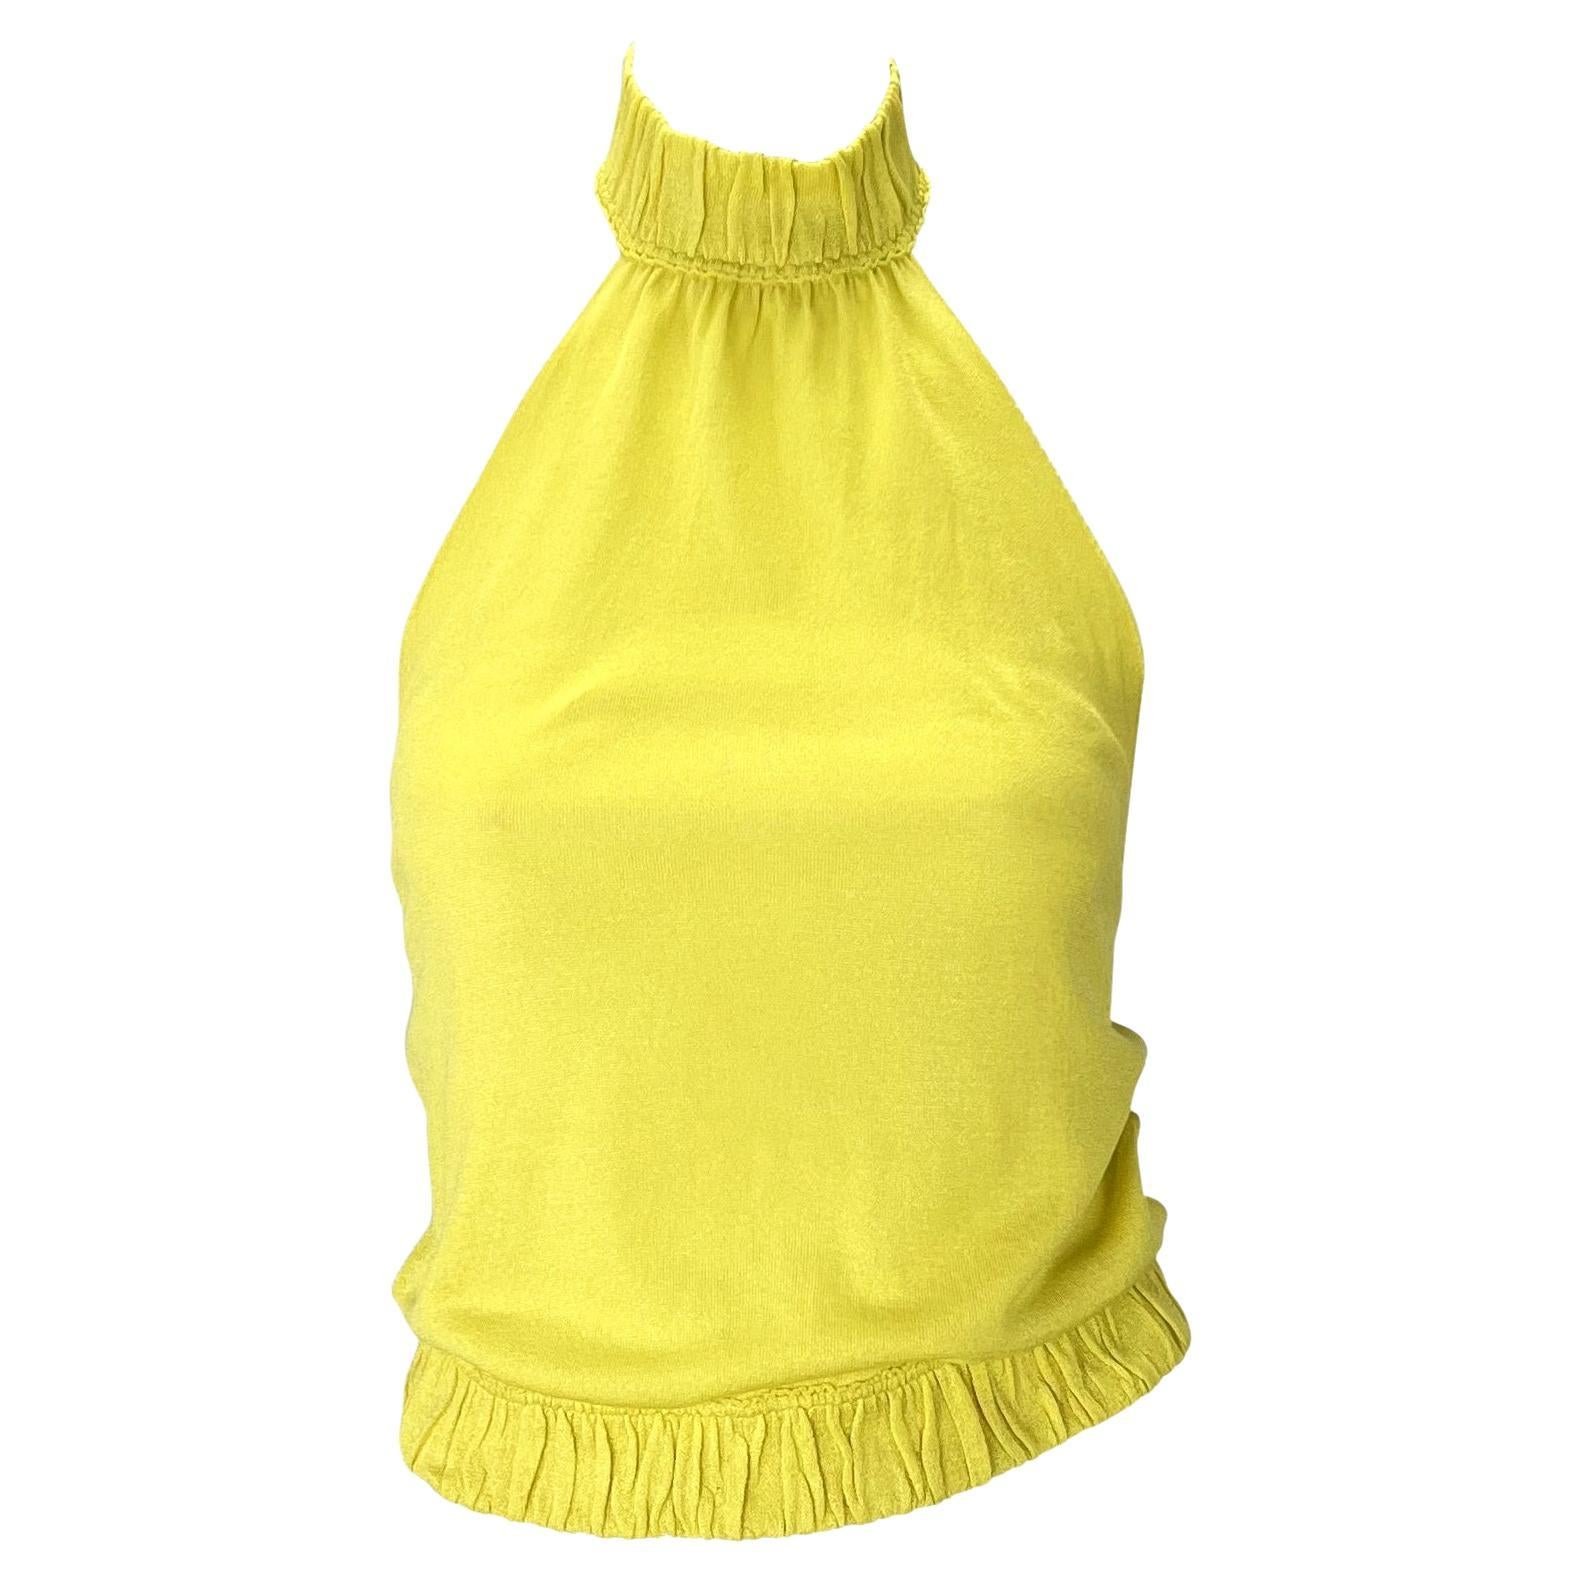 Jaune S/S 1999 Gucci by Tom Ford Yellow Silk Backless Sheerch Stretch Knit Top (Top en tricot extensible avec dos en soie) en vente